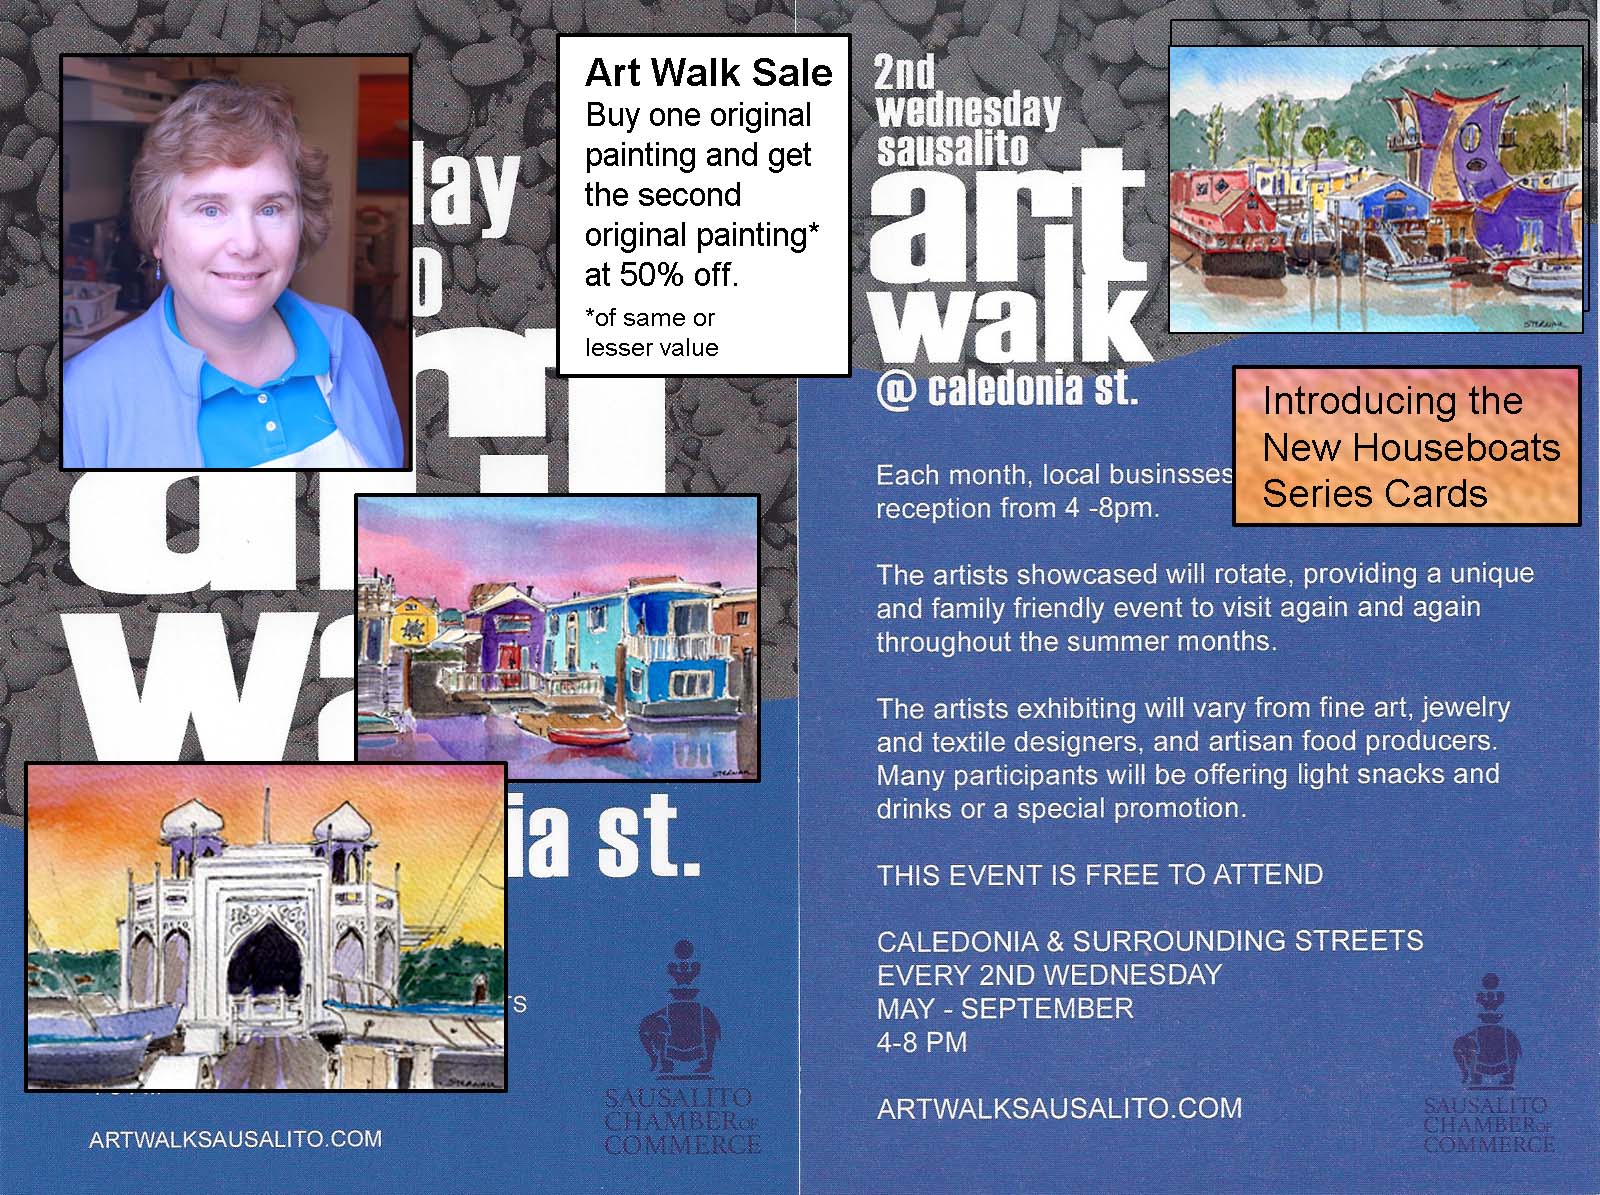 September 13 ART WALK event sat Susan Sternau Studios